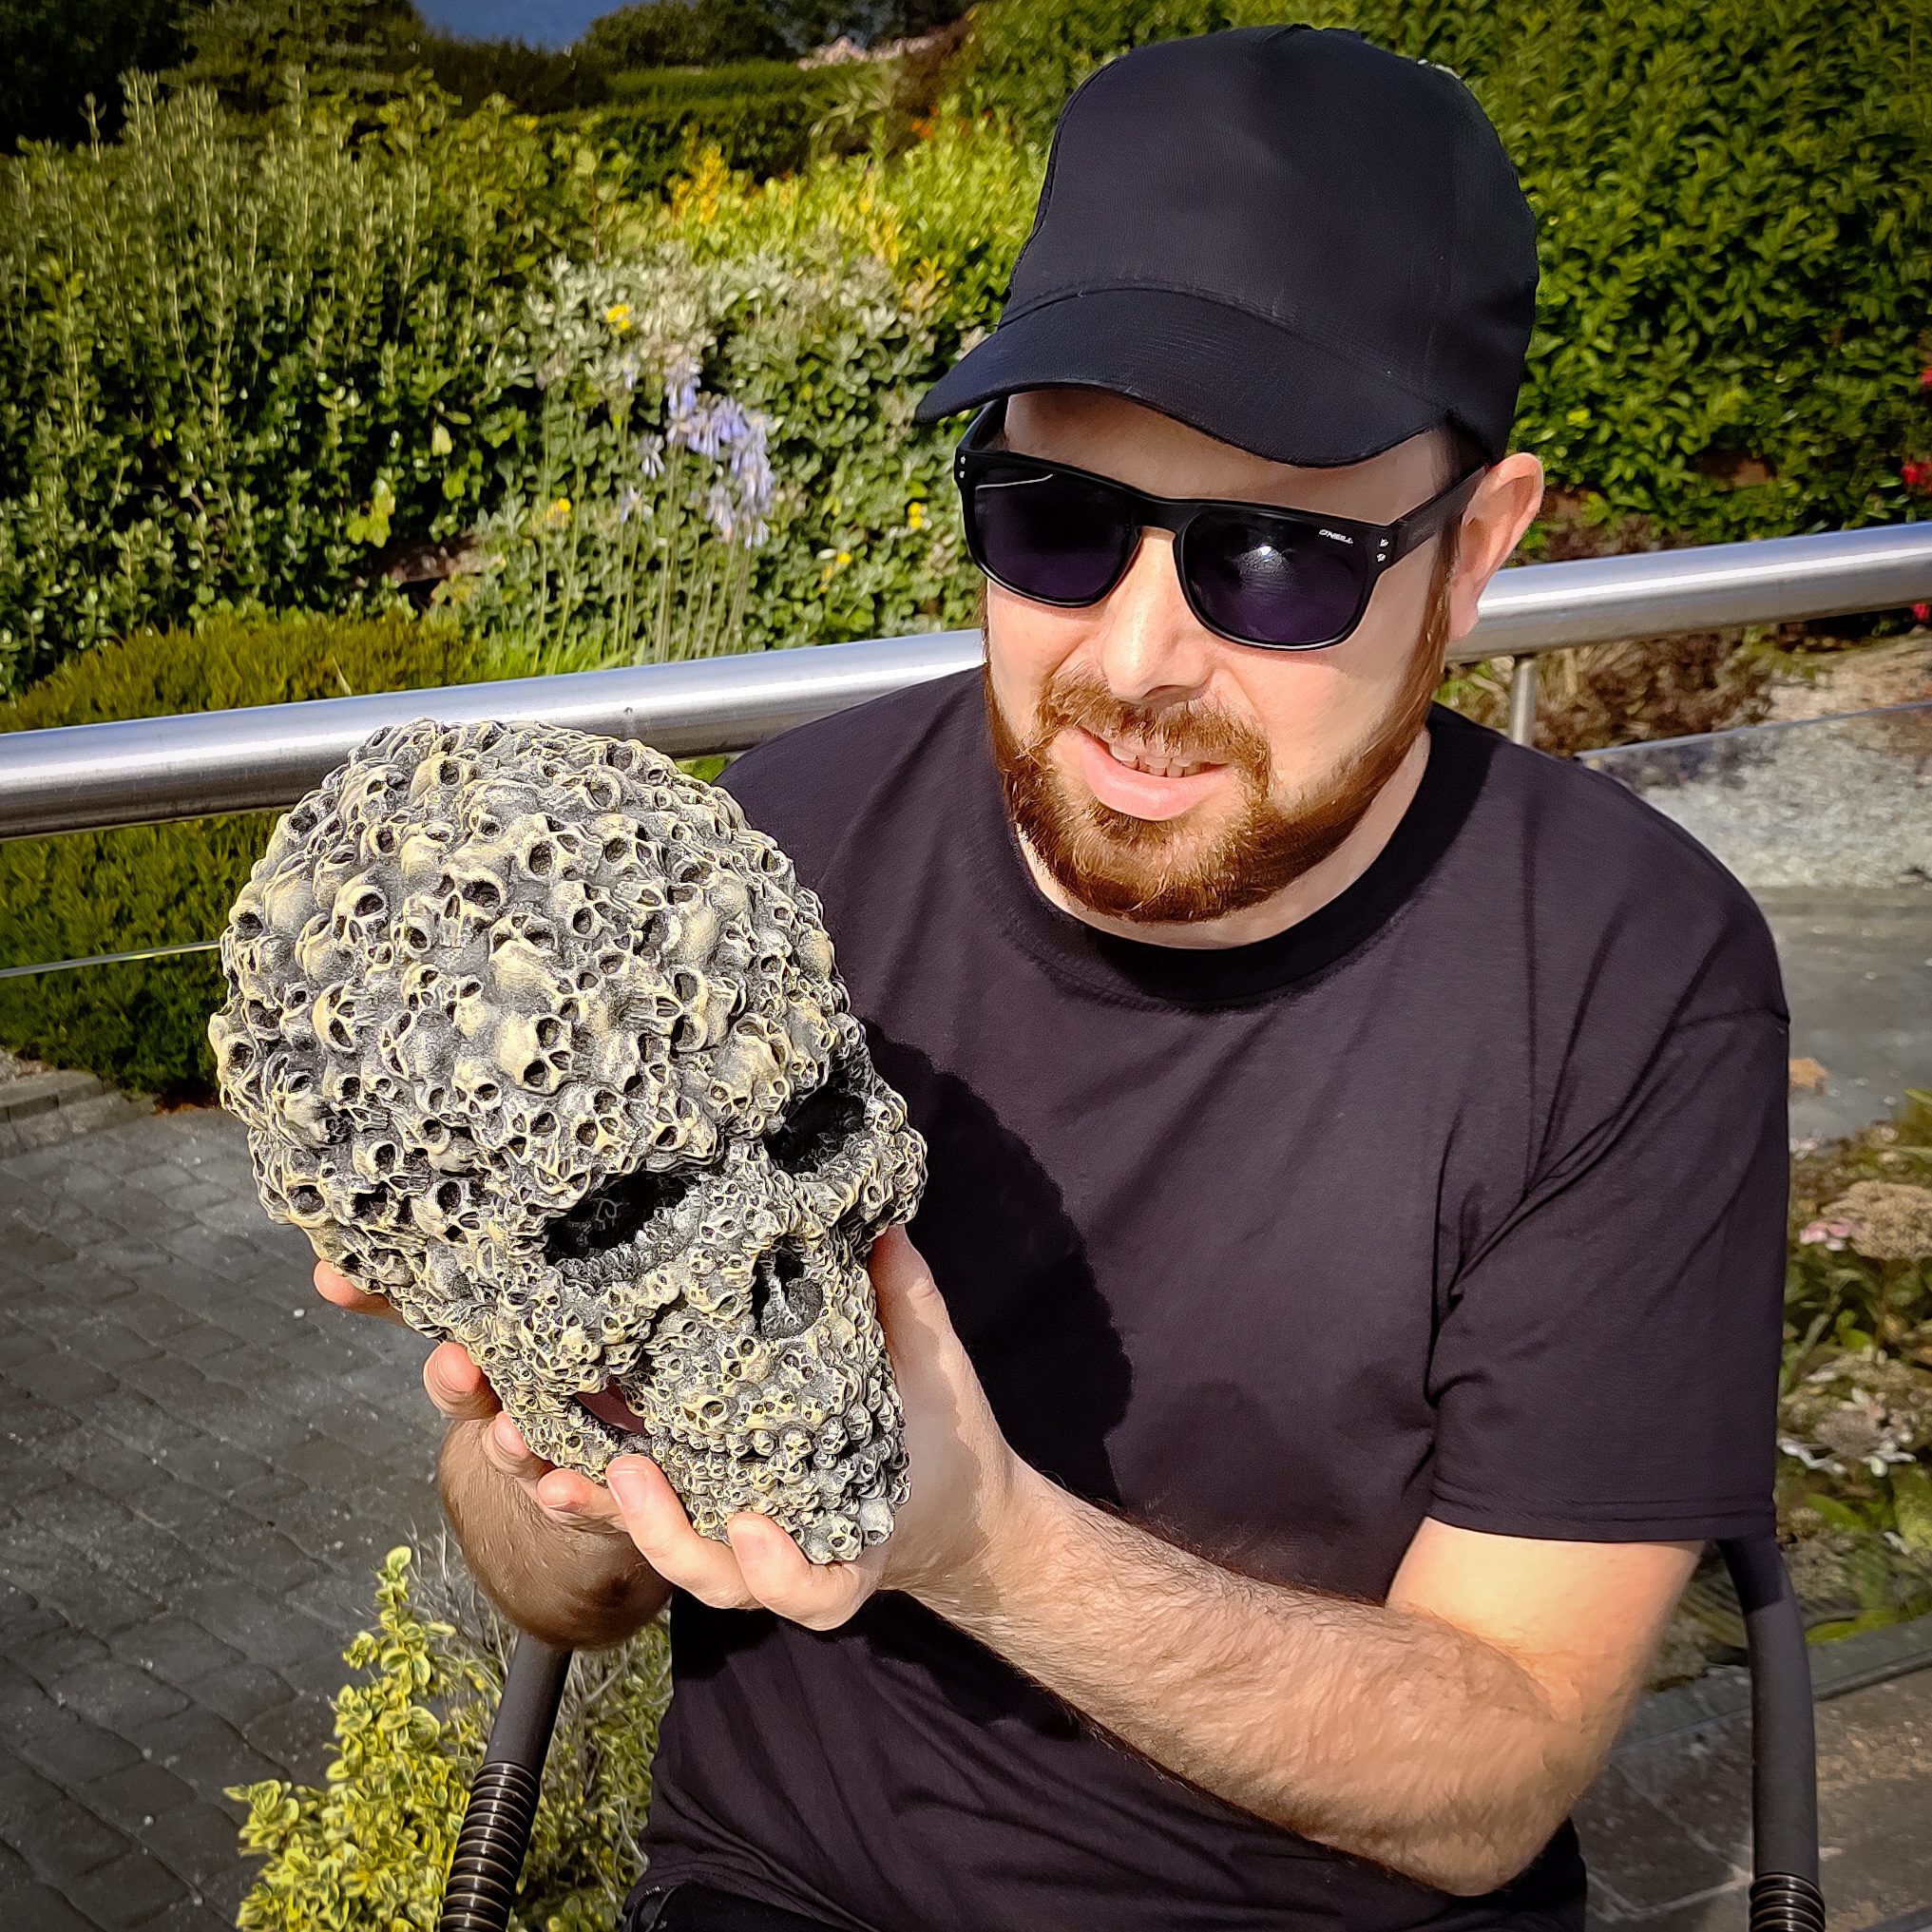 Skull of Skull *Life Size* Hand-painted decorative Skull. Handmade decoration item.